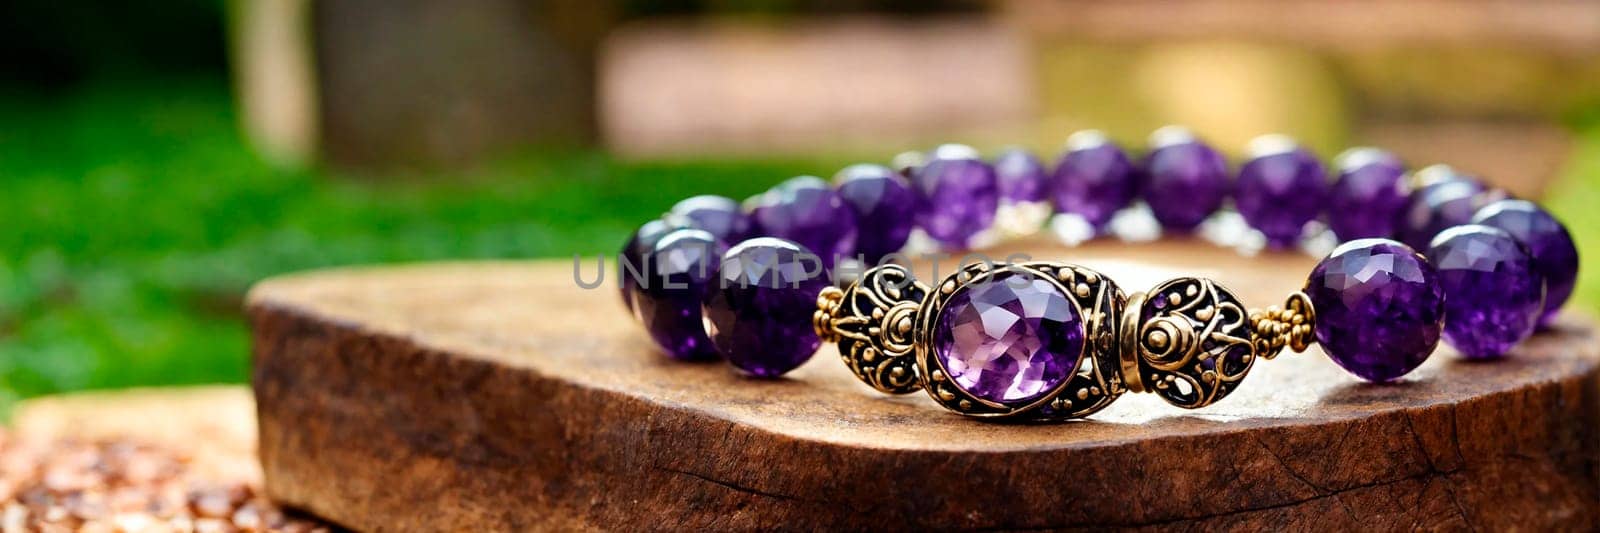 beautiful bracelet with amethyst. Selective focus. by yanadjana